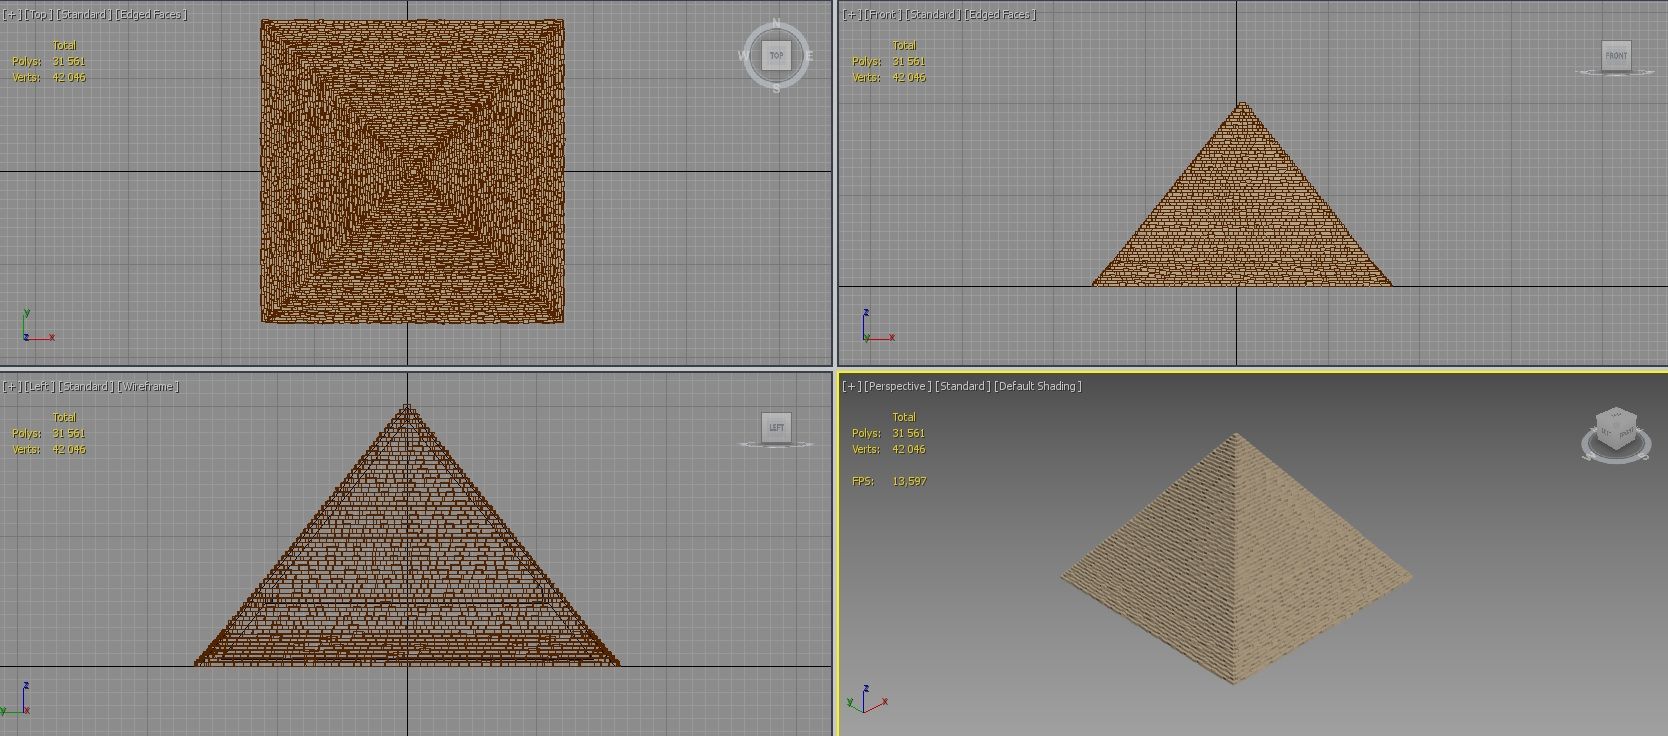 Pyramid-of-Giza-JPG8.jpg Download STL file The Great Pyramid of Giza • 3D printable object, Giordano_Bruno